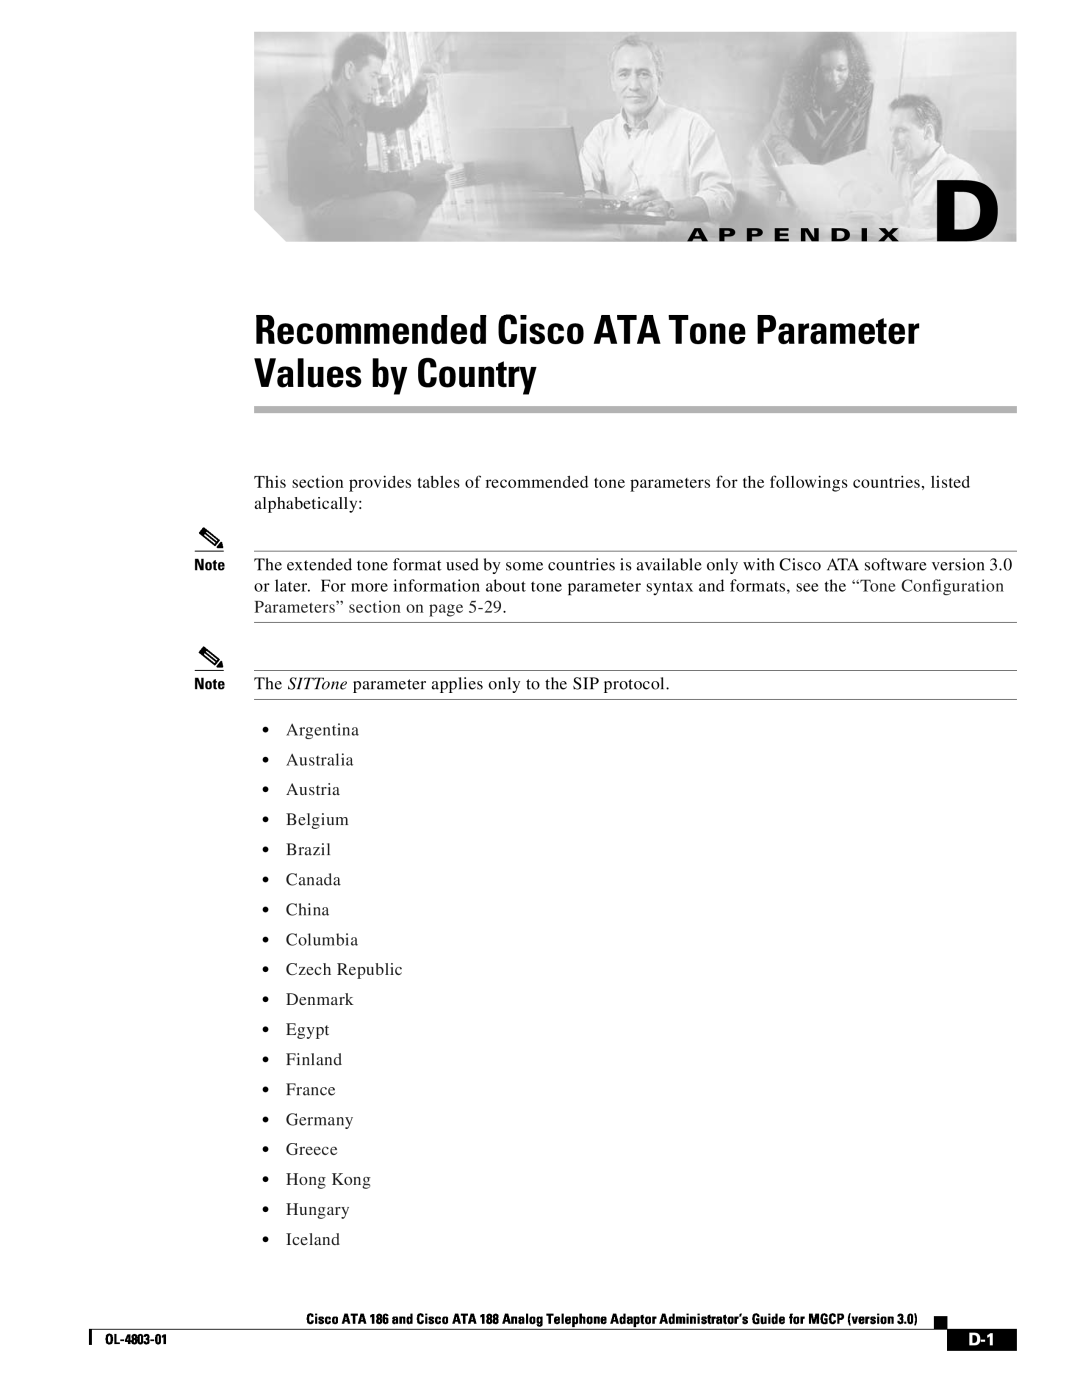 Cisco Systems ATA 188, ATA 186 Recommended Cisco ATA Tone Parameter Values by Country, A P P E N D I X D, Hungary Iceland 